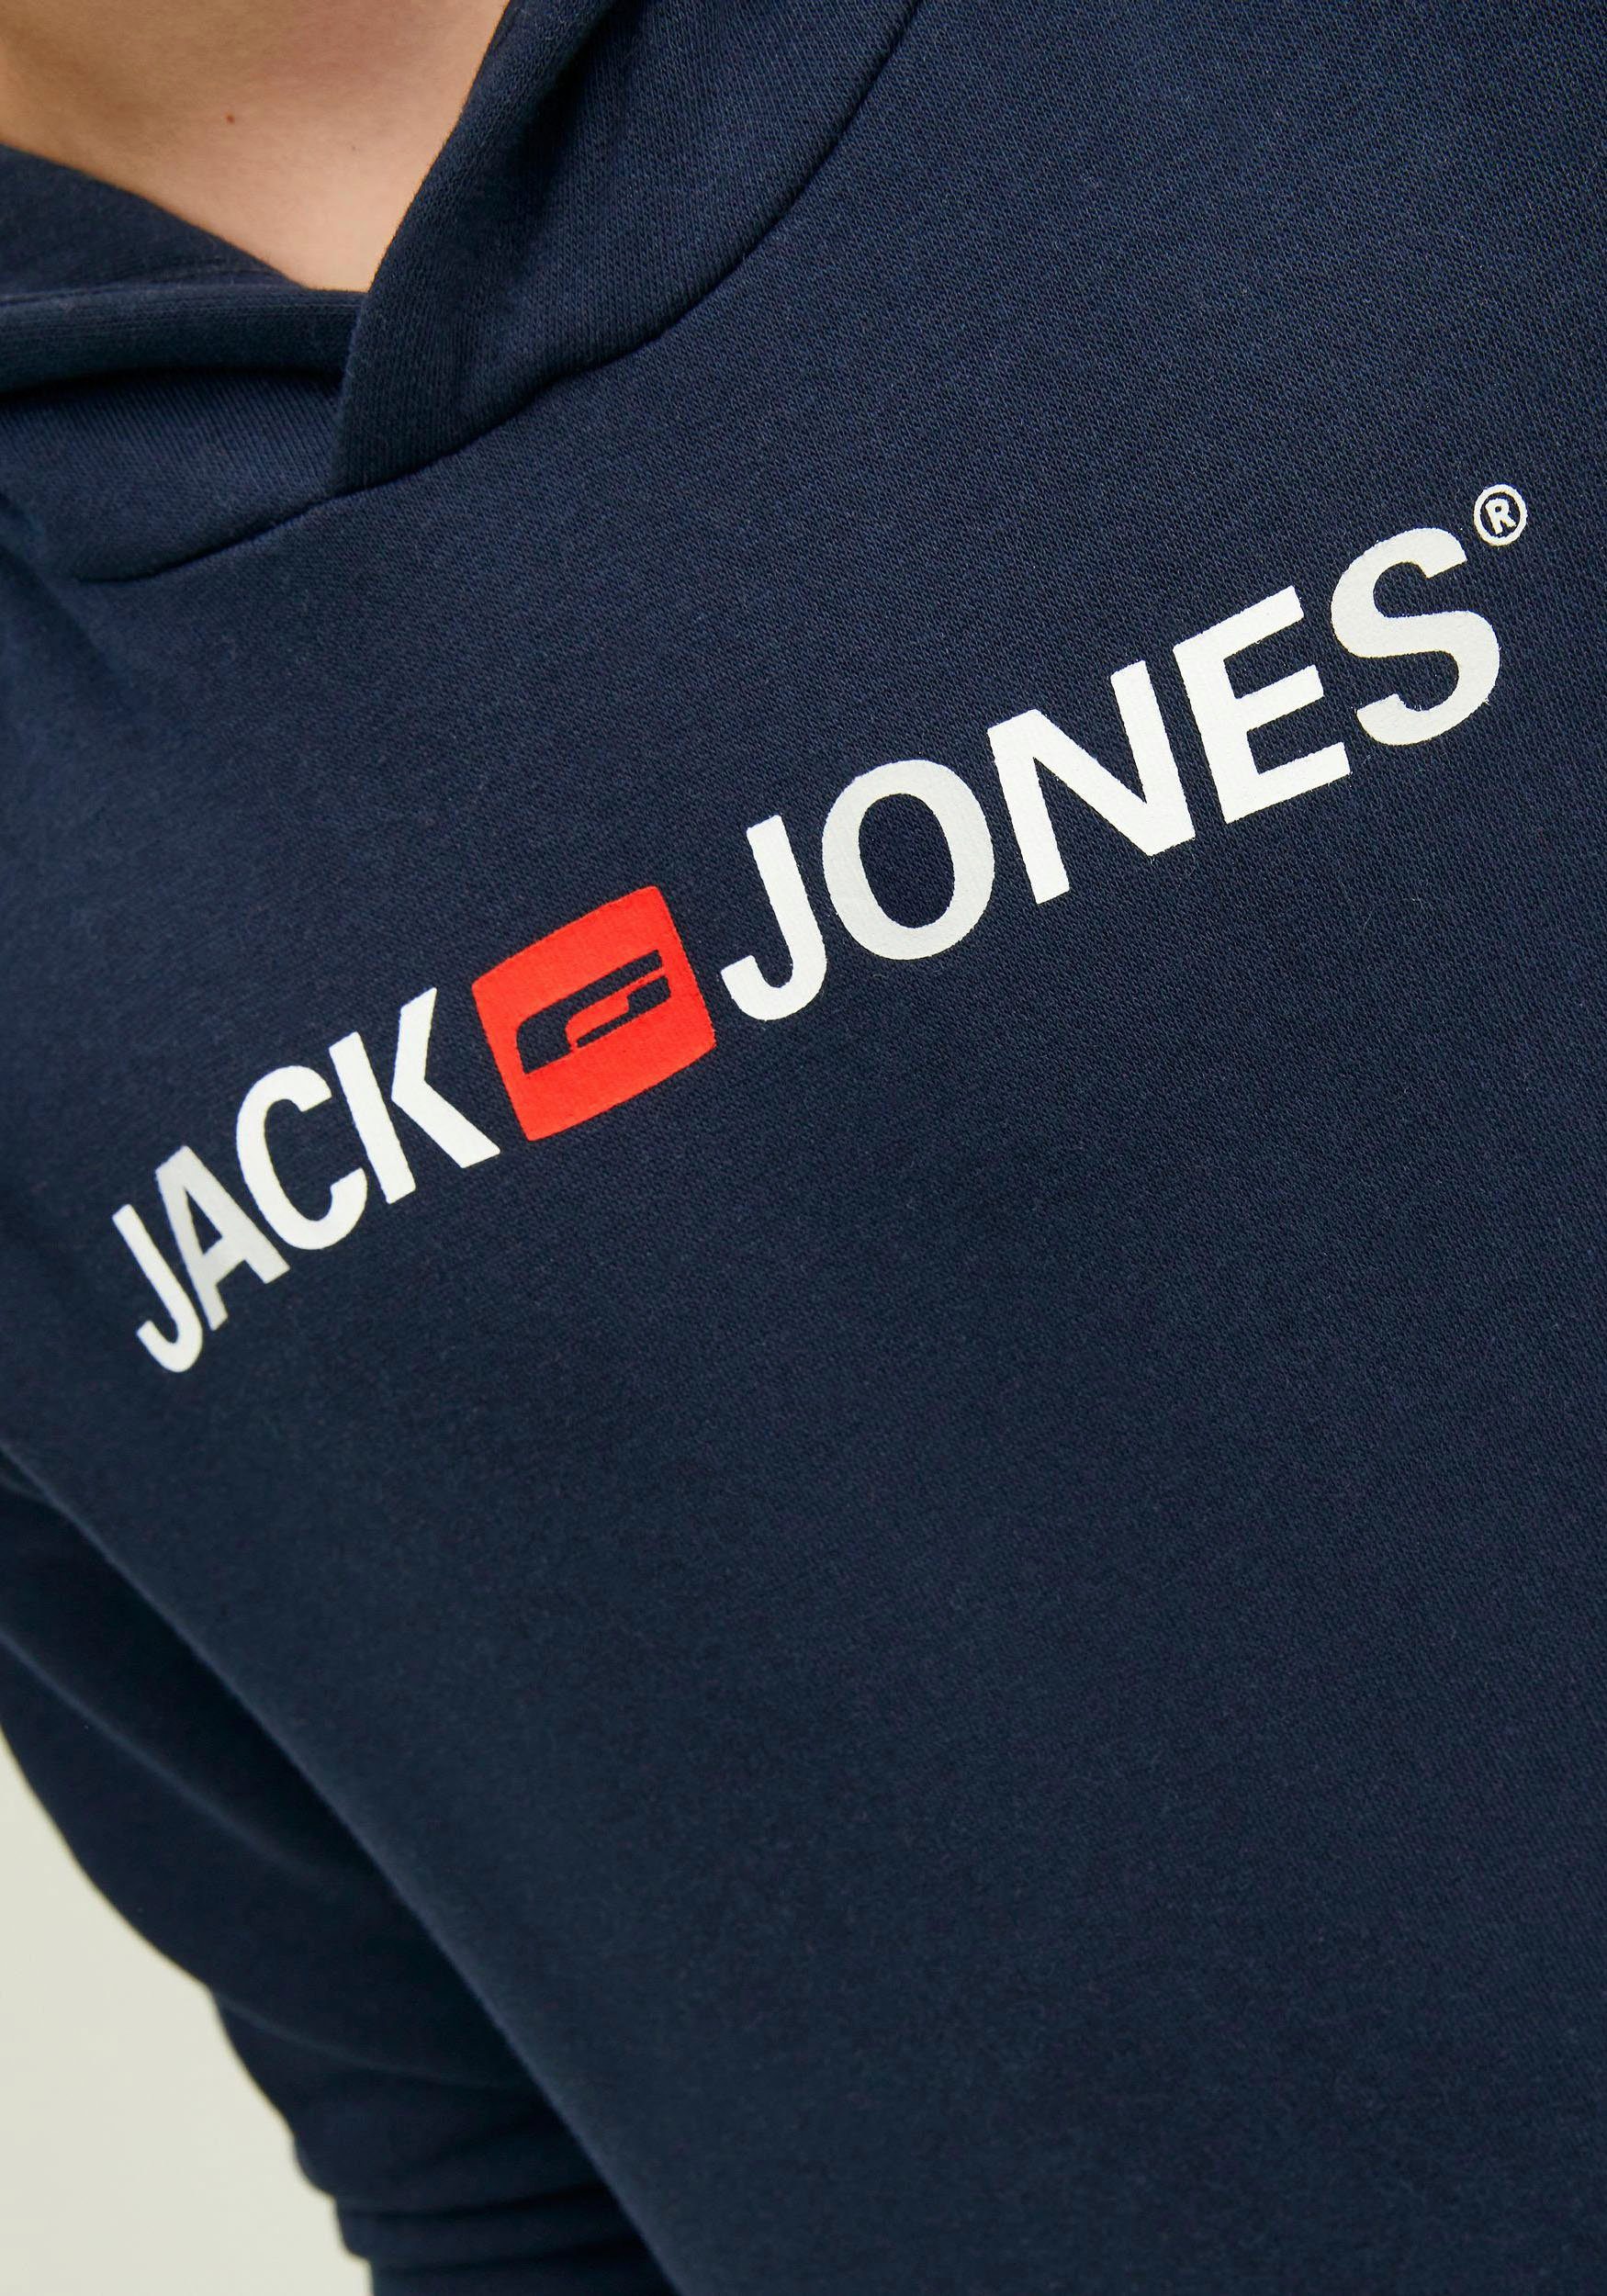 & Jones Jack Teal Kapuzensweatshirt Deep Junior